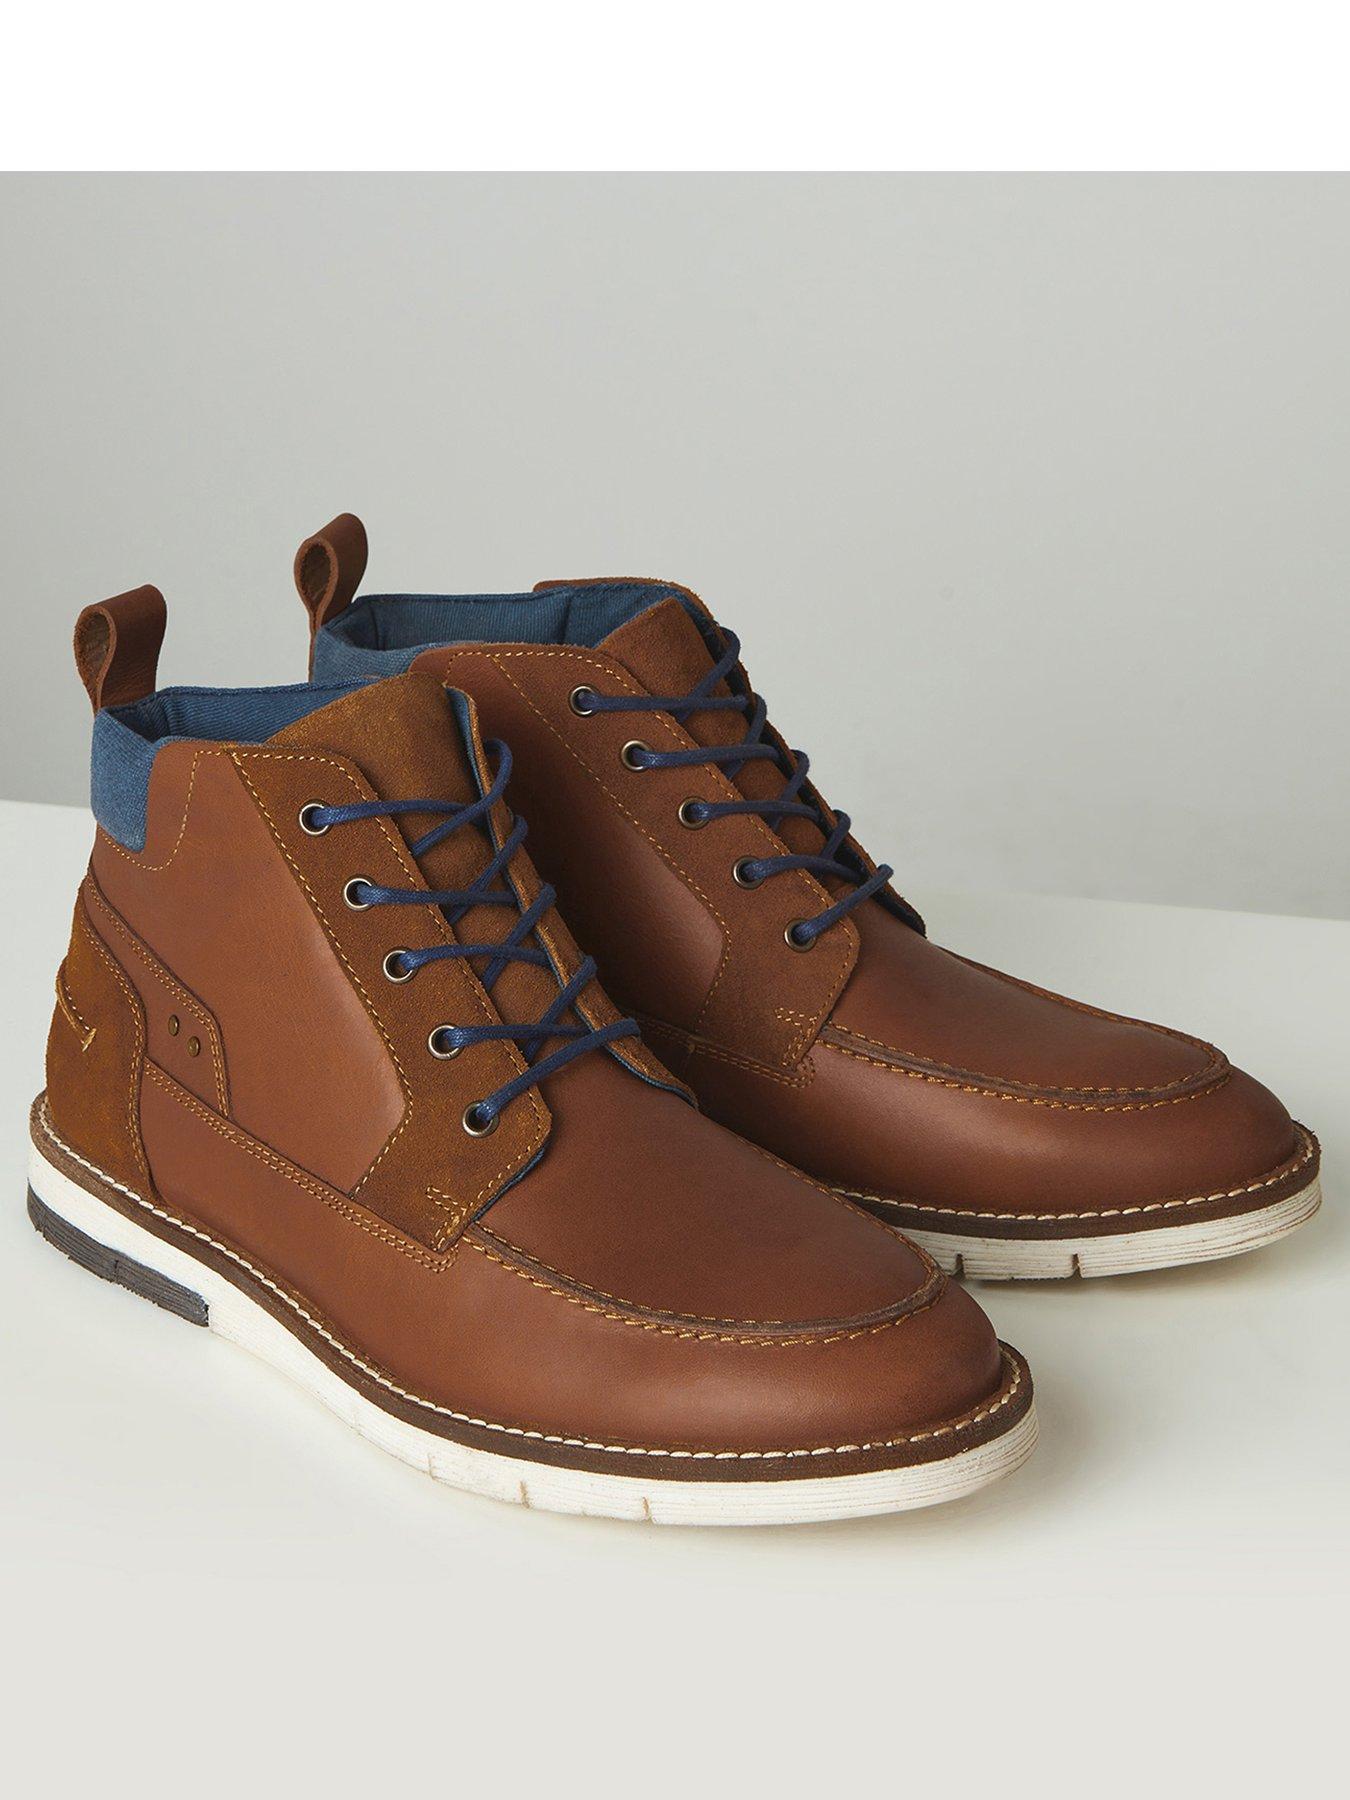 joe browns men's shoes